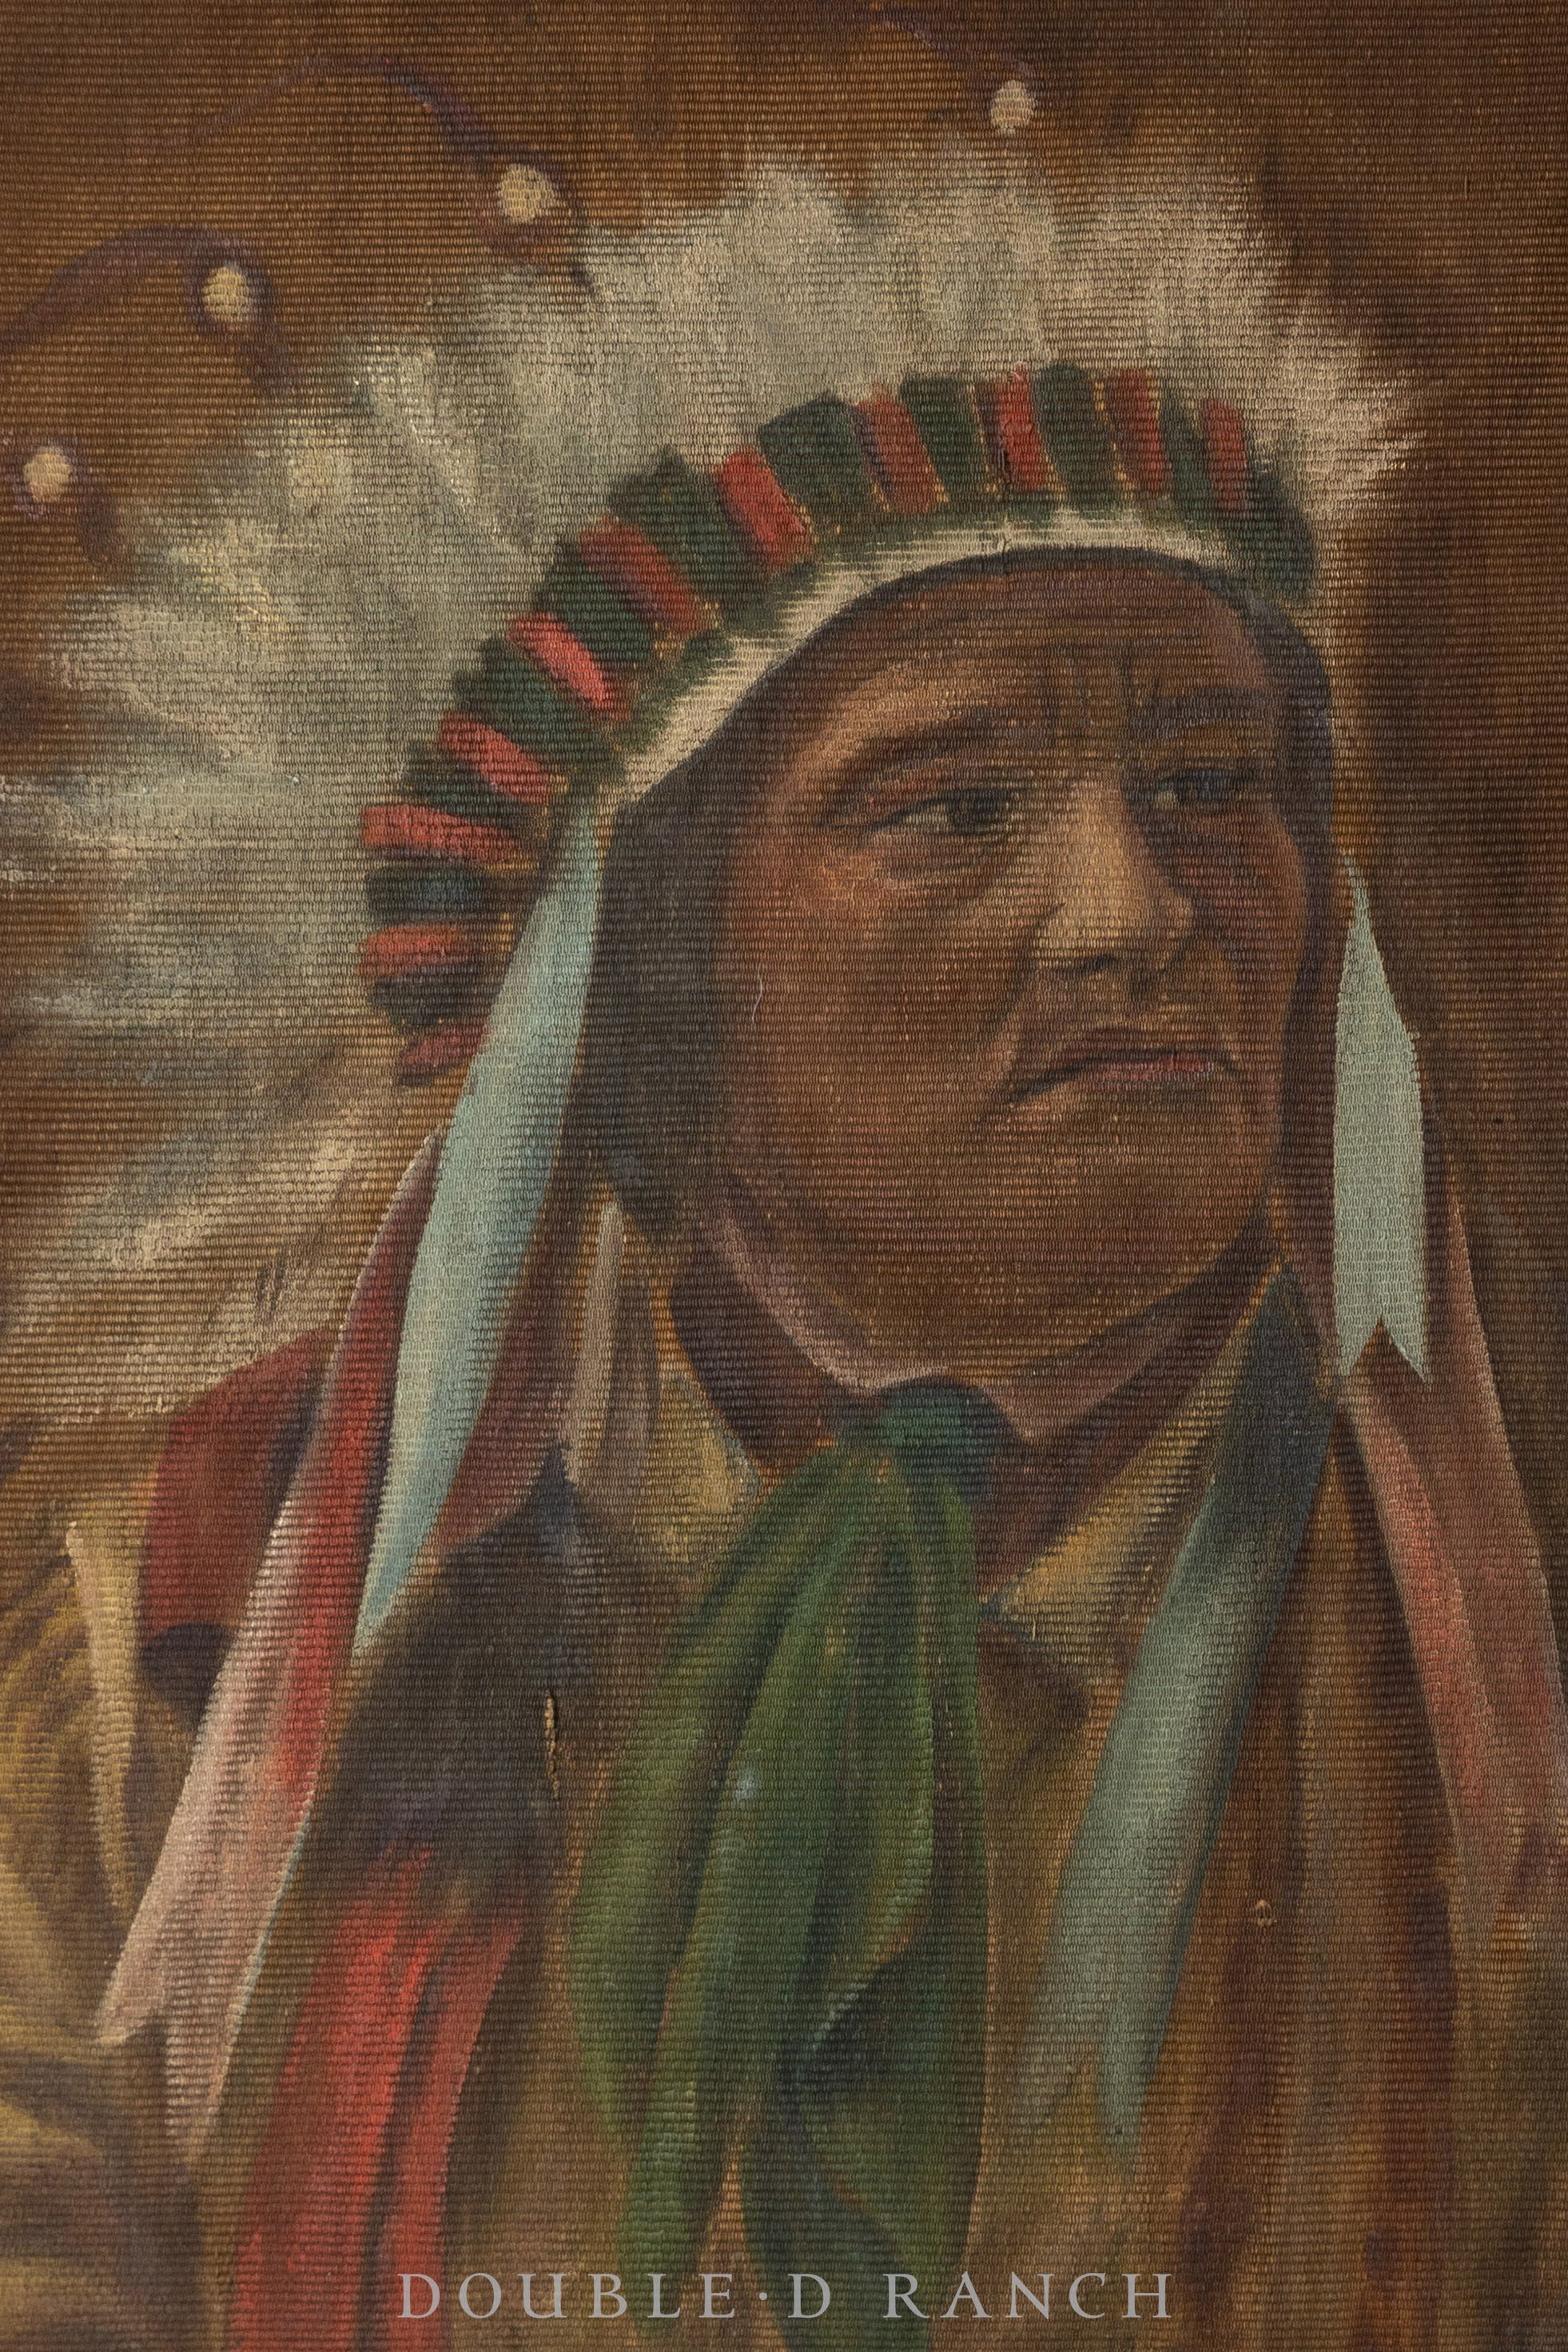 Art, Oil on Velvet, Portrait, Native American Chief, Vintage, 1286